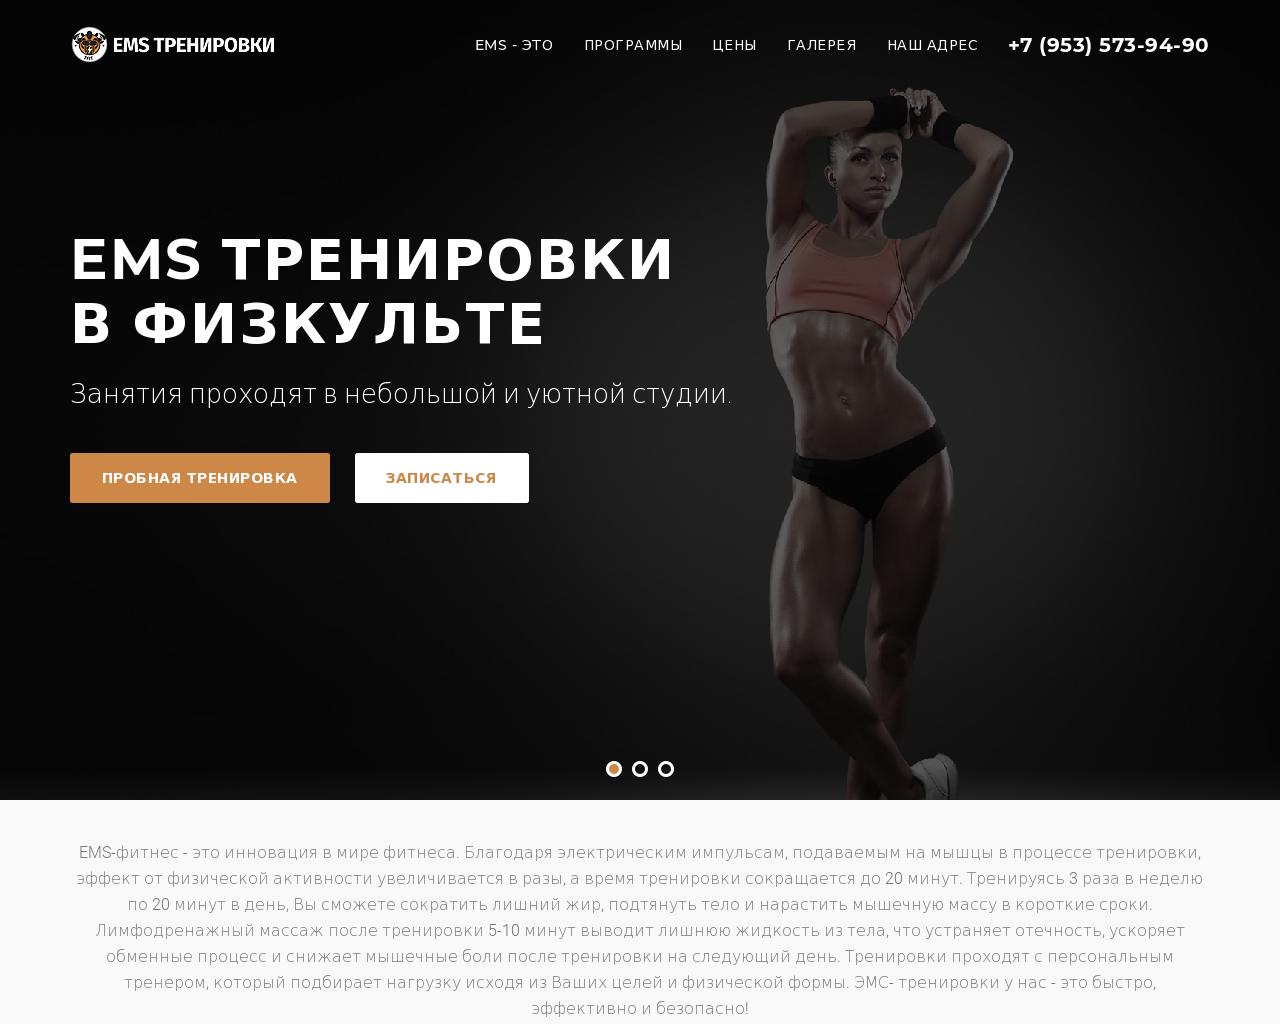 Изображение сайта ems-nn.ru в разрешении 1280x1024